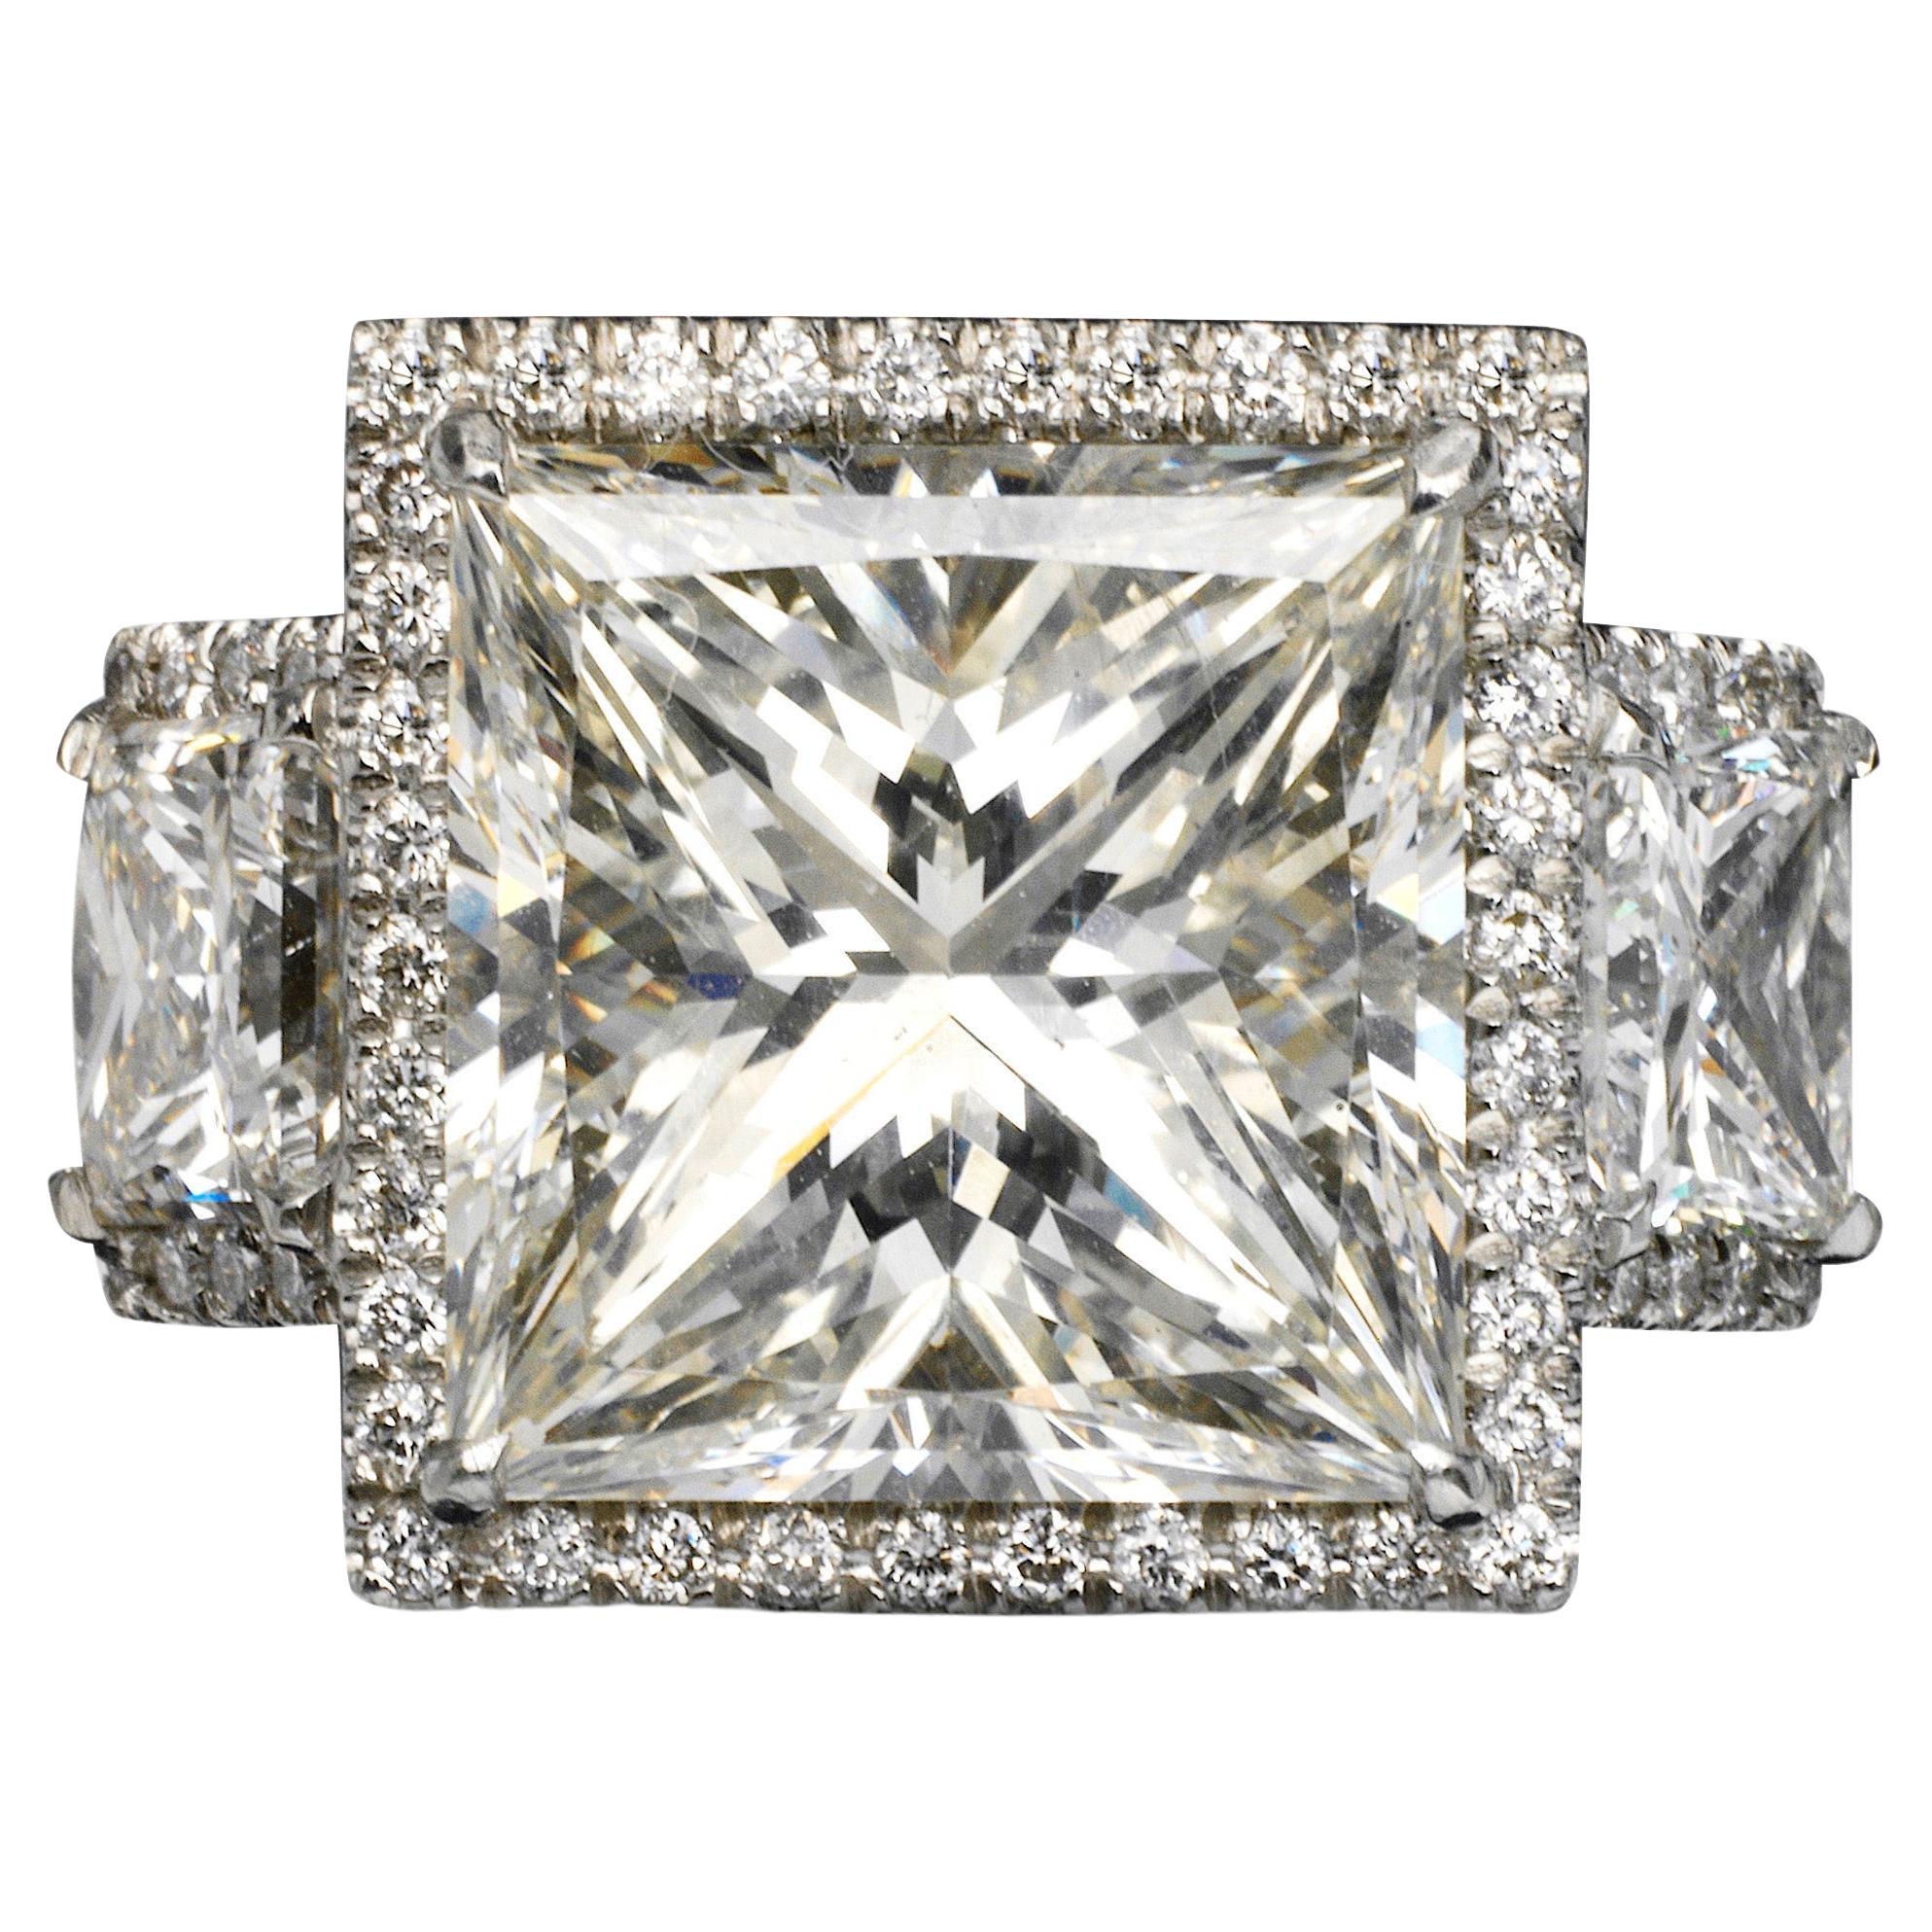 11 Carat Princess Cut Diamond Engagement Ring Platinum Certified G VS1 For Sale